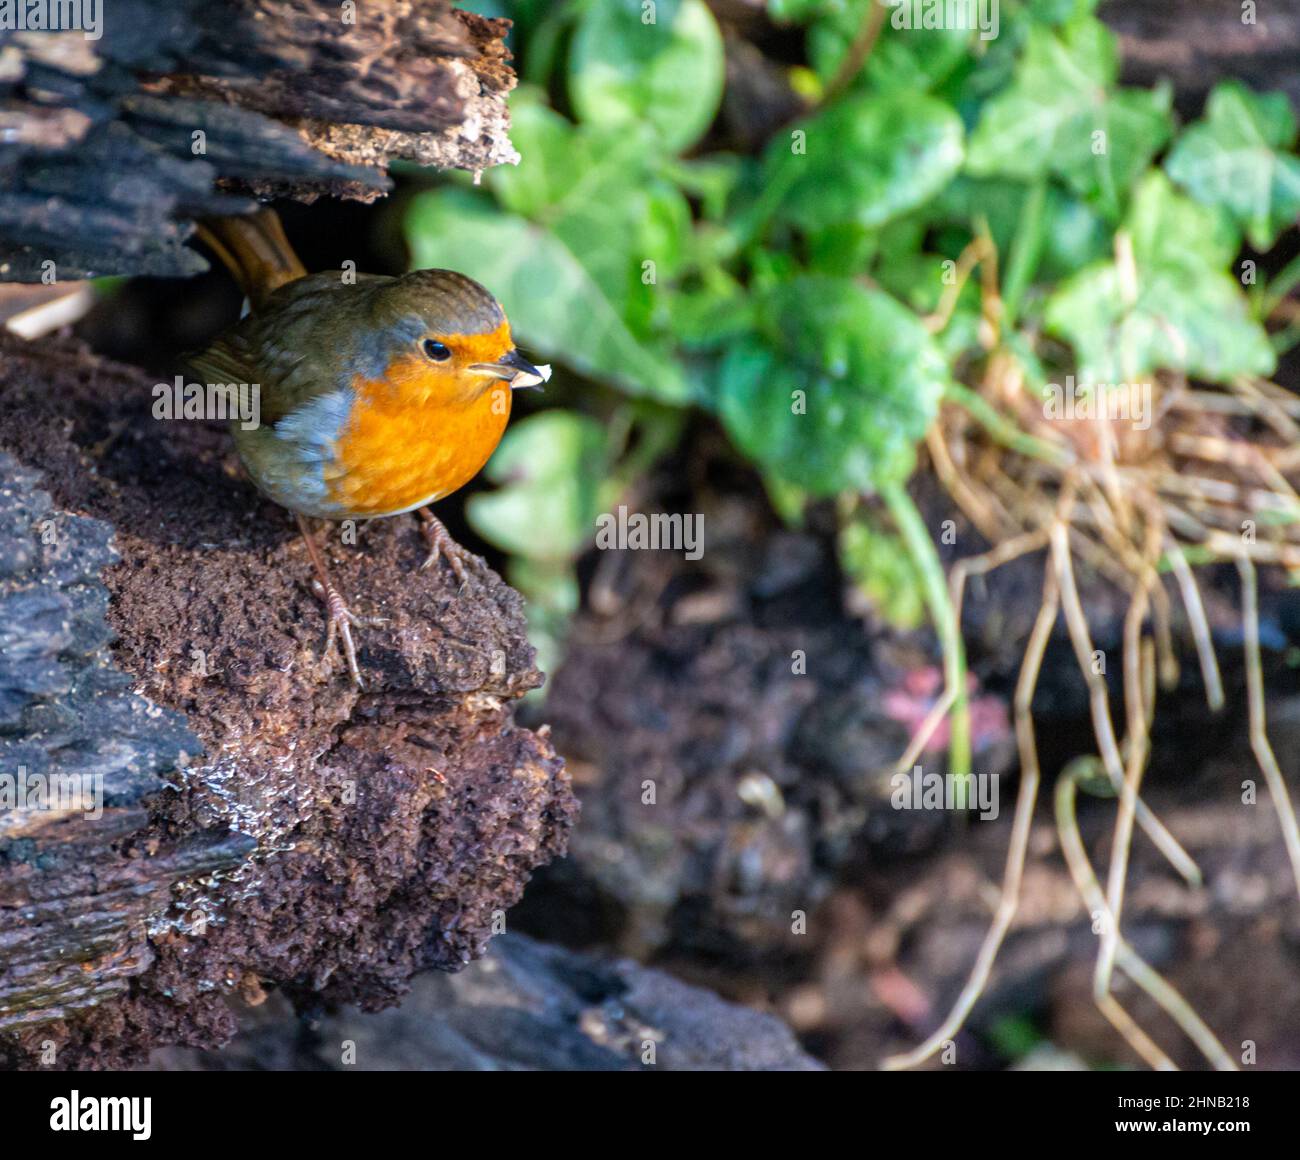 Robin carrying a corn seed in its beak. England, UK Stock Photo